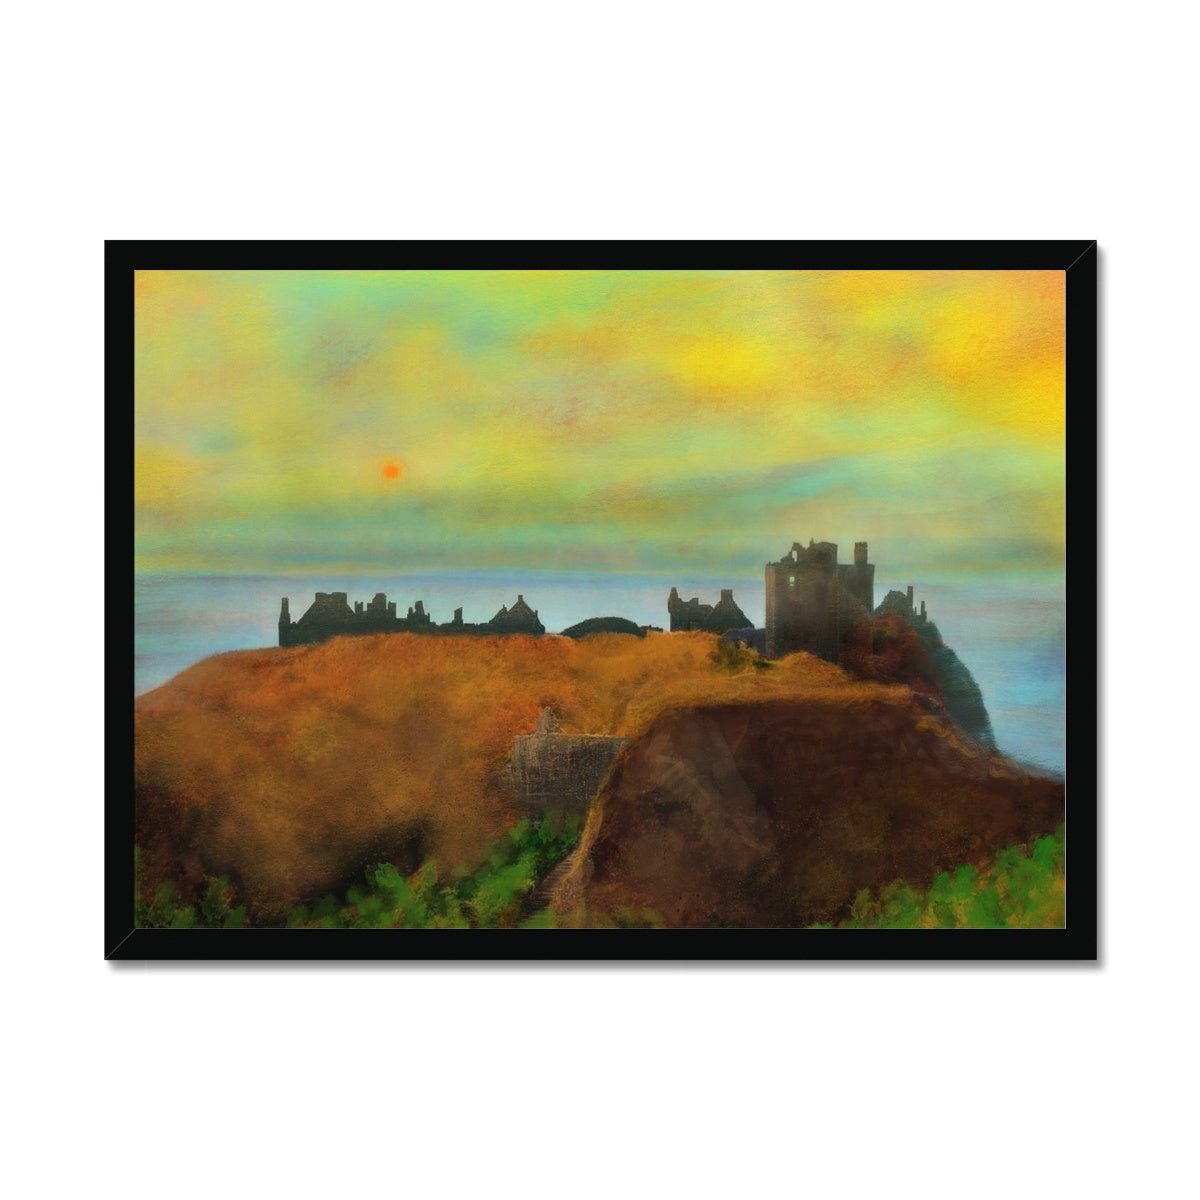 Dunnottar Castle Dusk Painting | Framed Prints From Scotland-Framed Prints-Scottish Castles Art Gallery-A2 Landscape-Black Frame-Paintings, Prints, Homeware, Art Gifts From Scotland By Scottish Artist Kevin Hunter